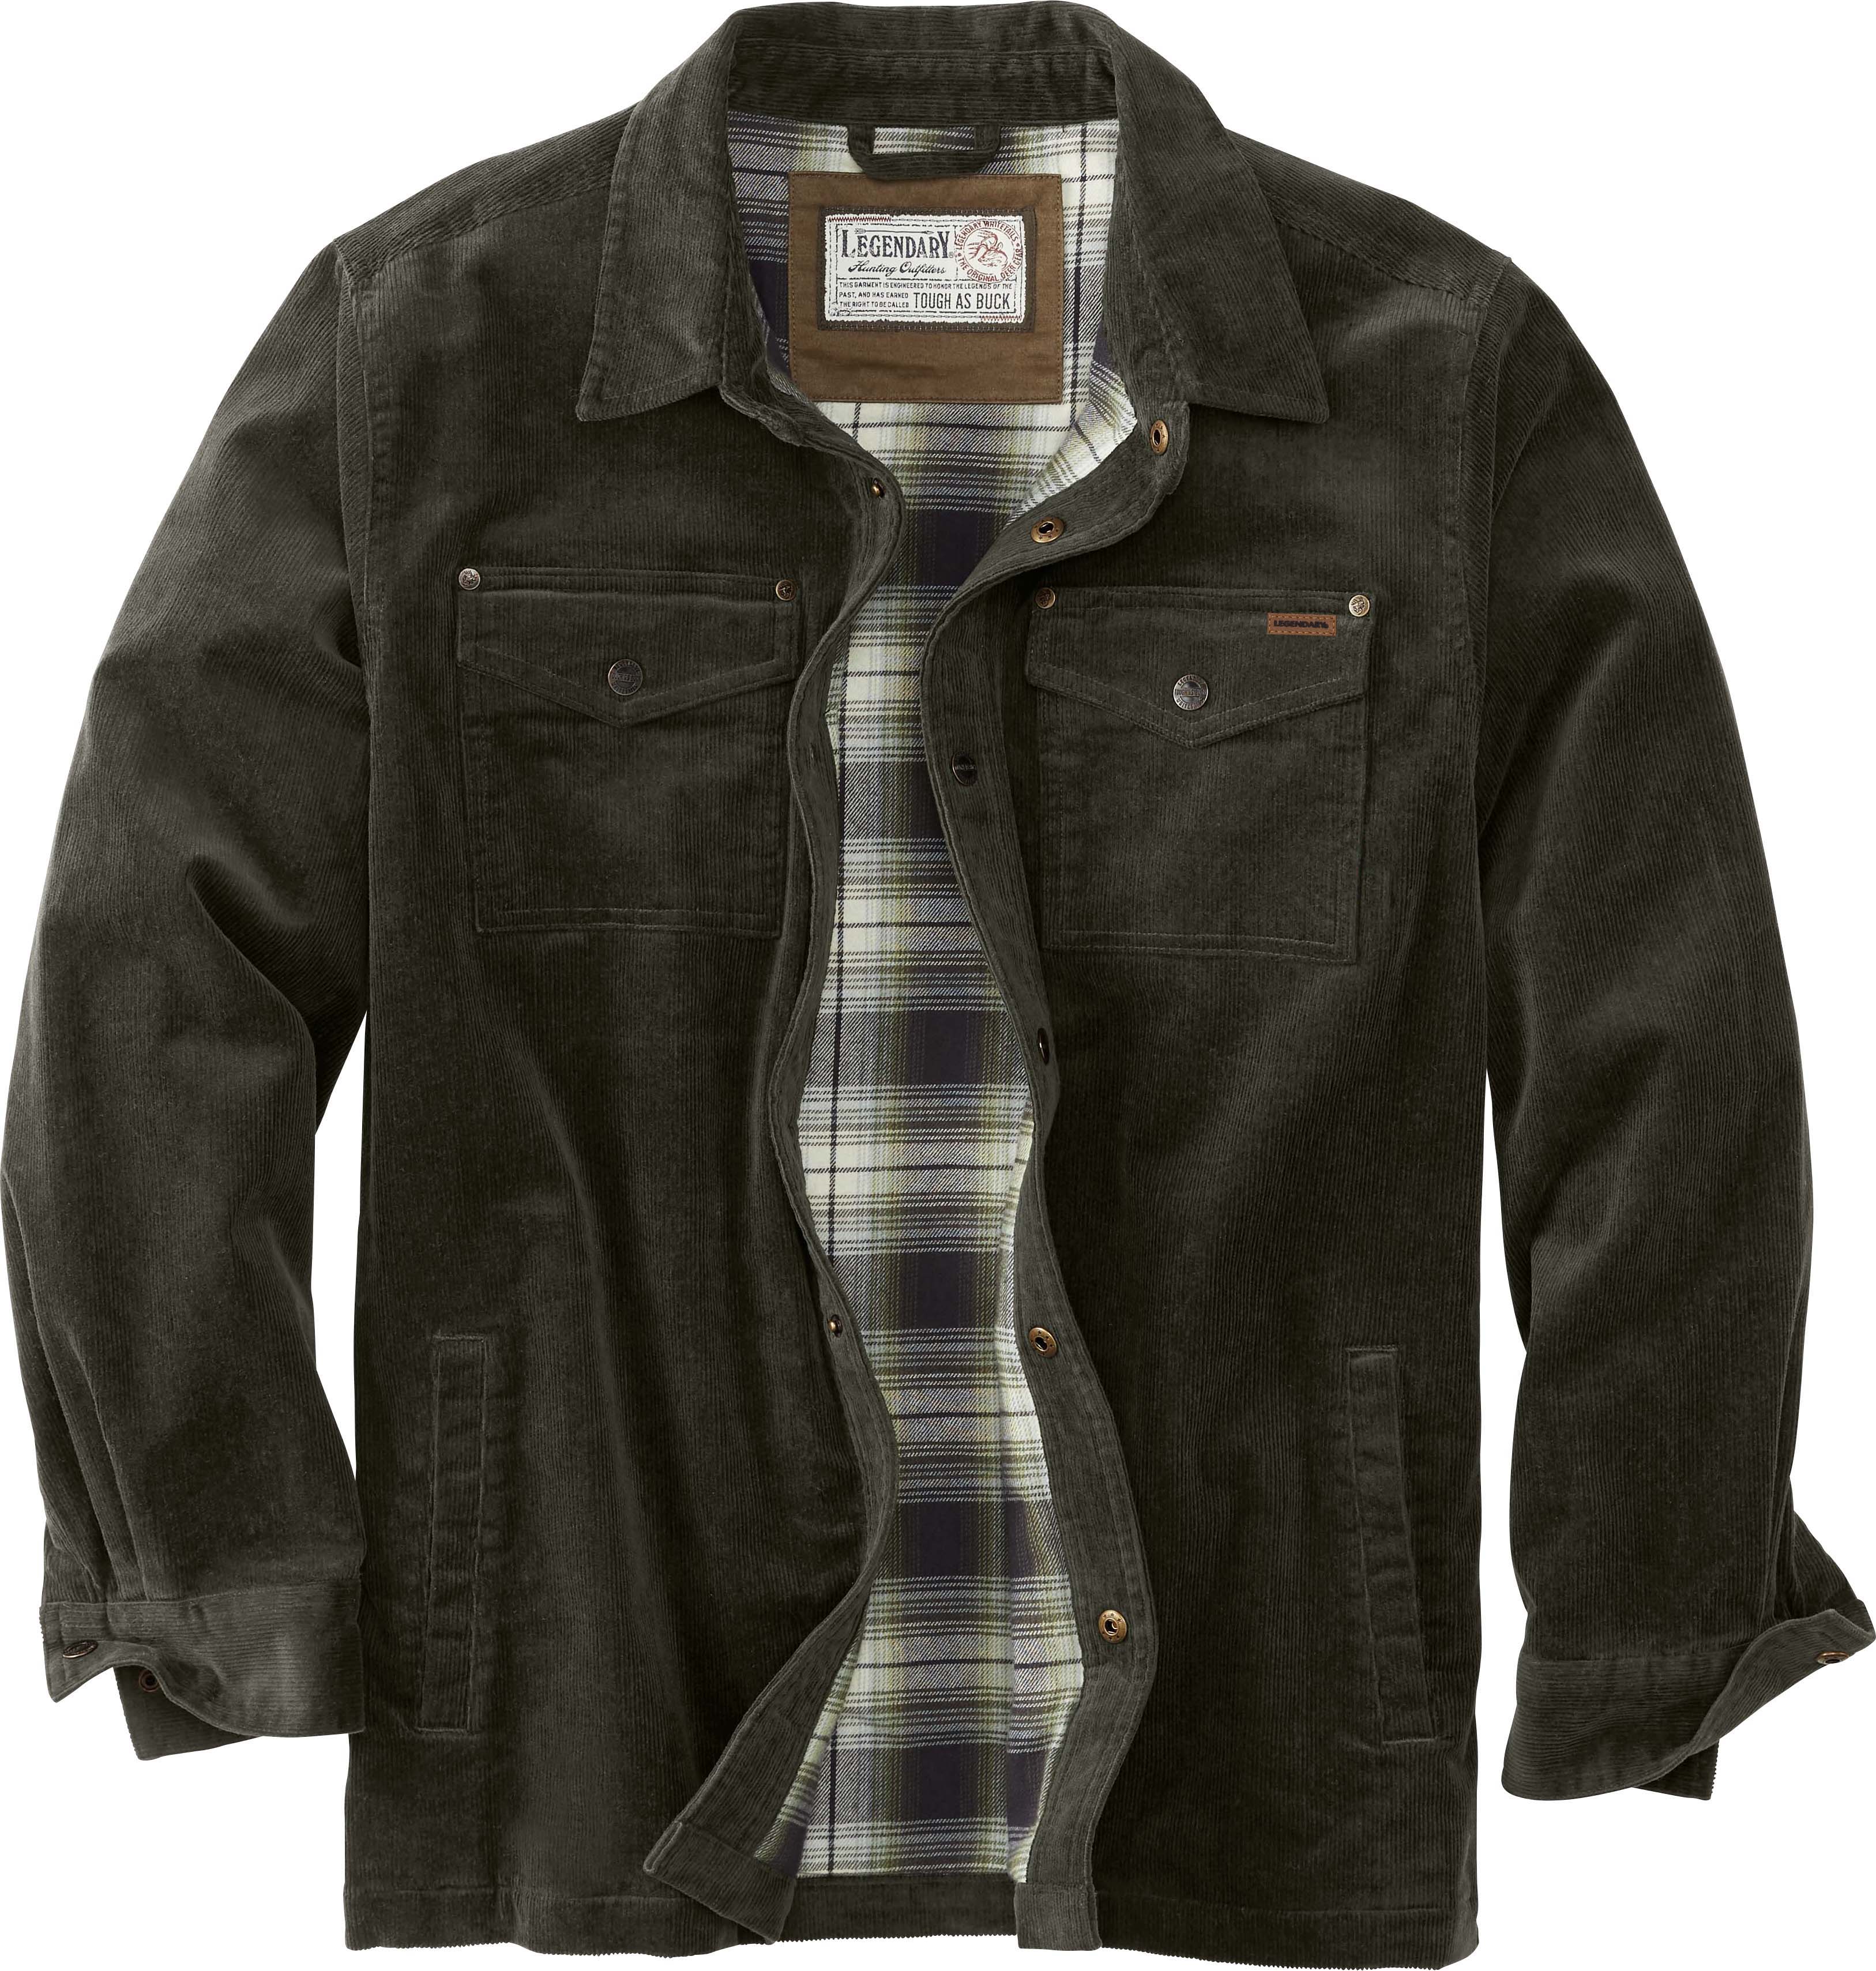 Shop Men's Tough As Buck Corduroy Shirt Jacket | Legendary Whitetails